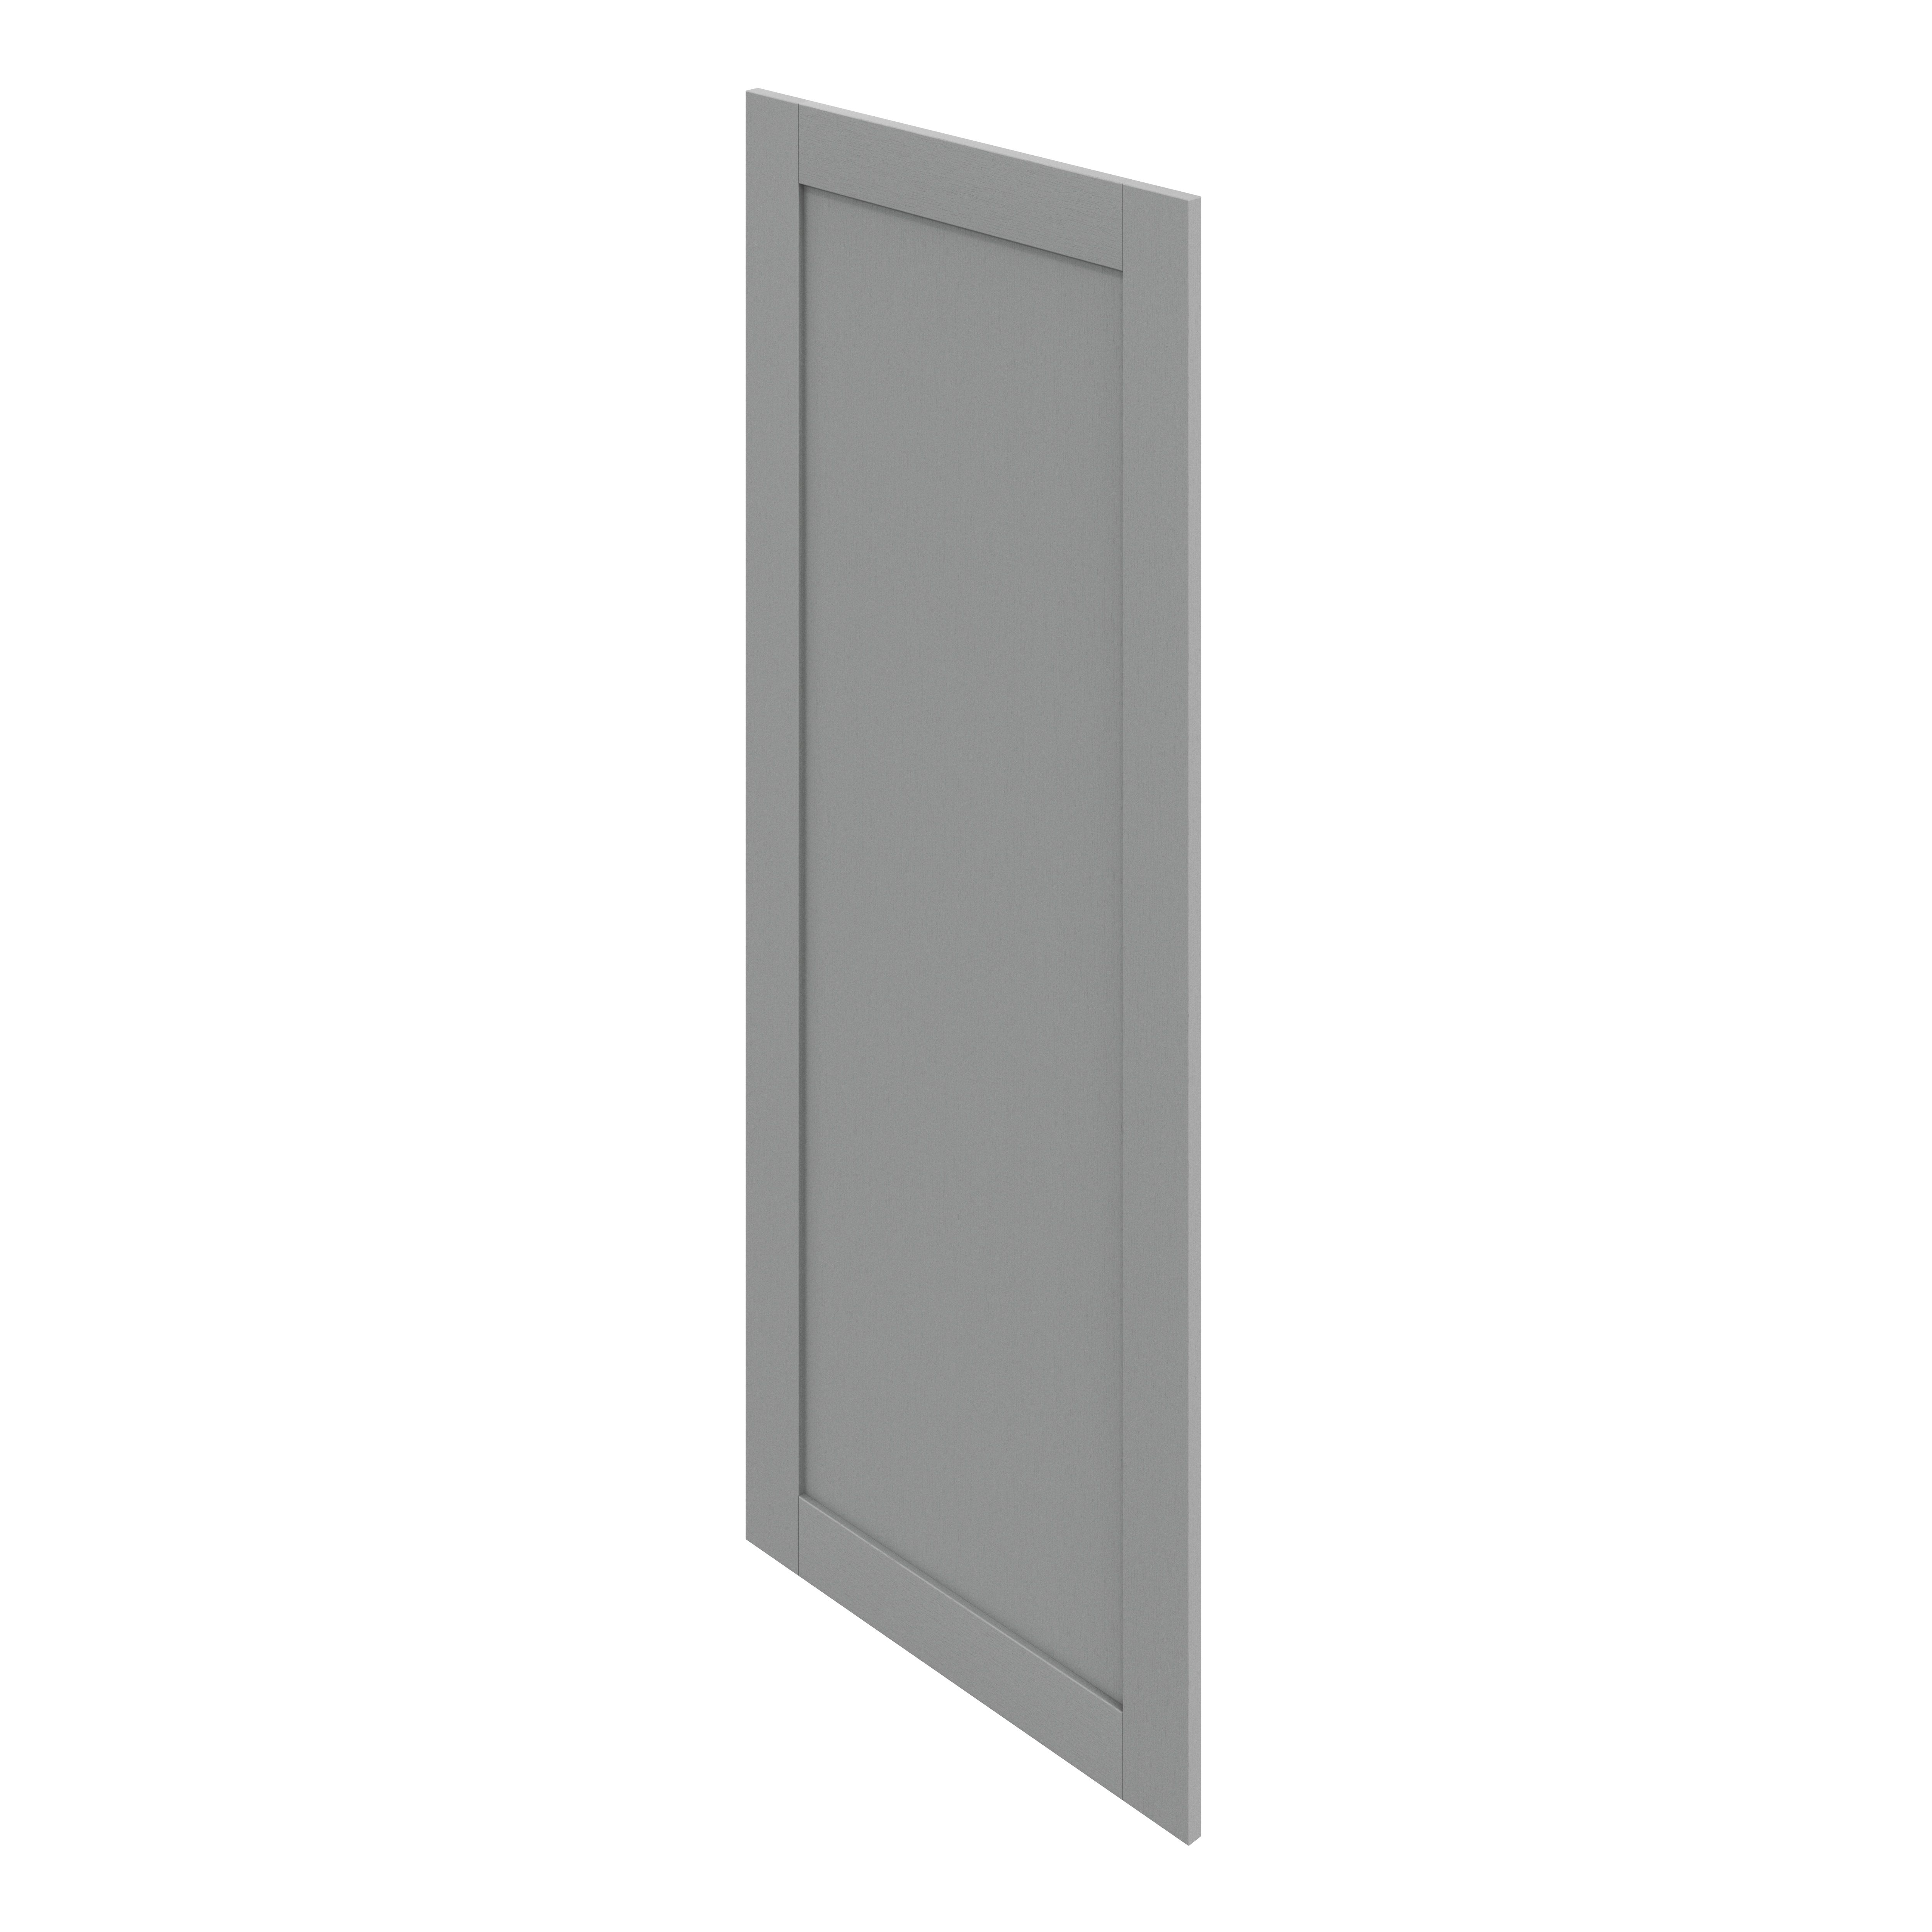 GoodHome Alpinia Matt Slate Grey Painted Wood Effect Shaker Tall larder Cabinet door (W)600mm (H)1467mm (T)18mm